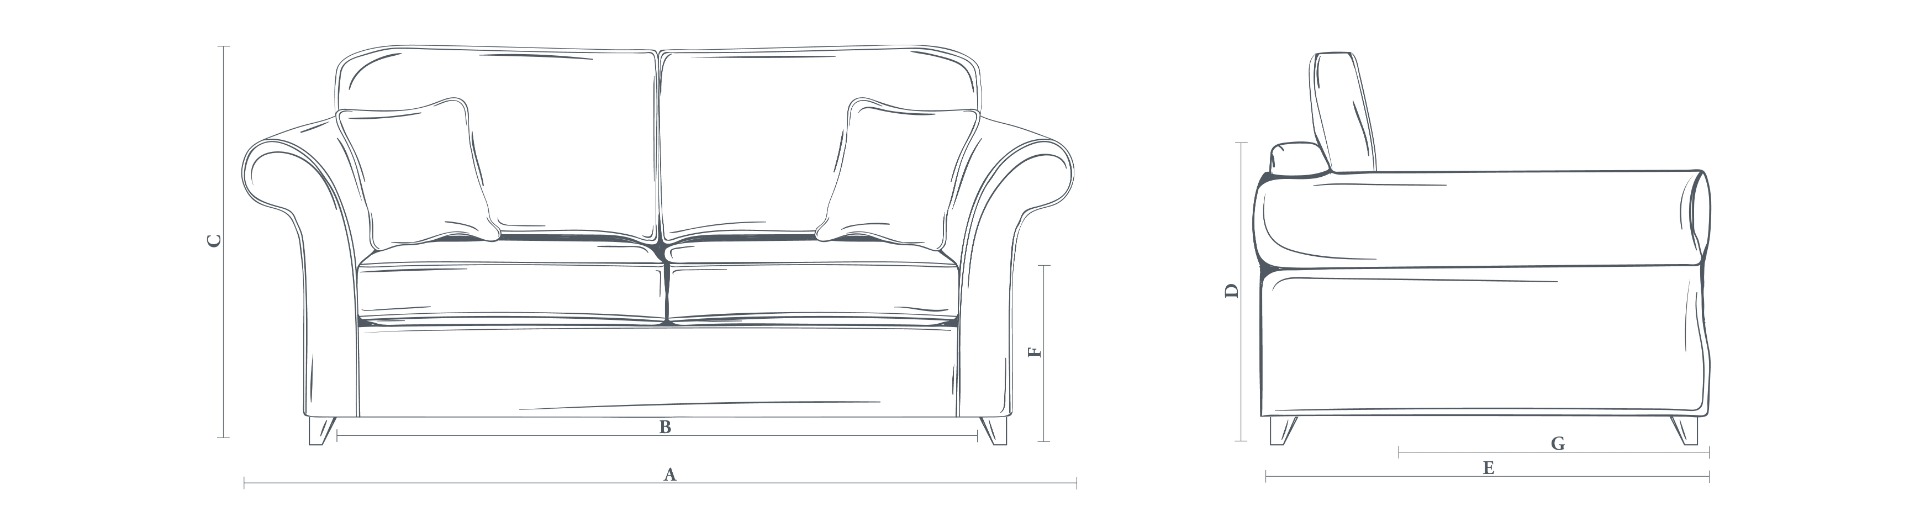 The Langridge Sofa 3 Seater